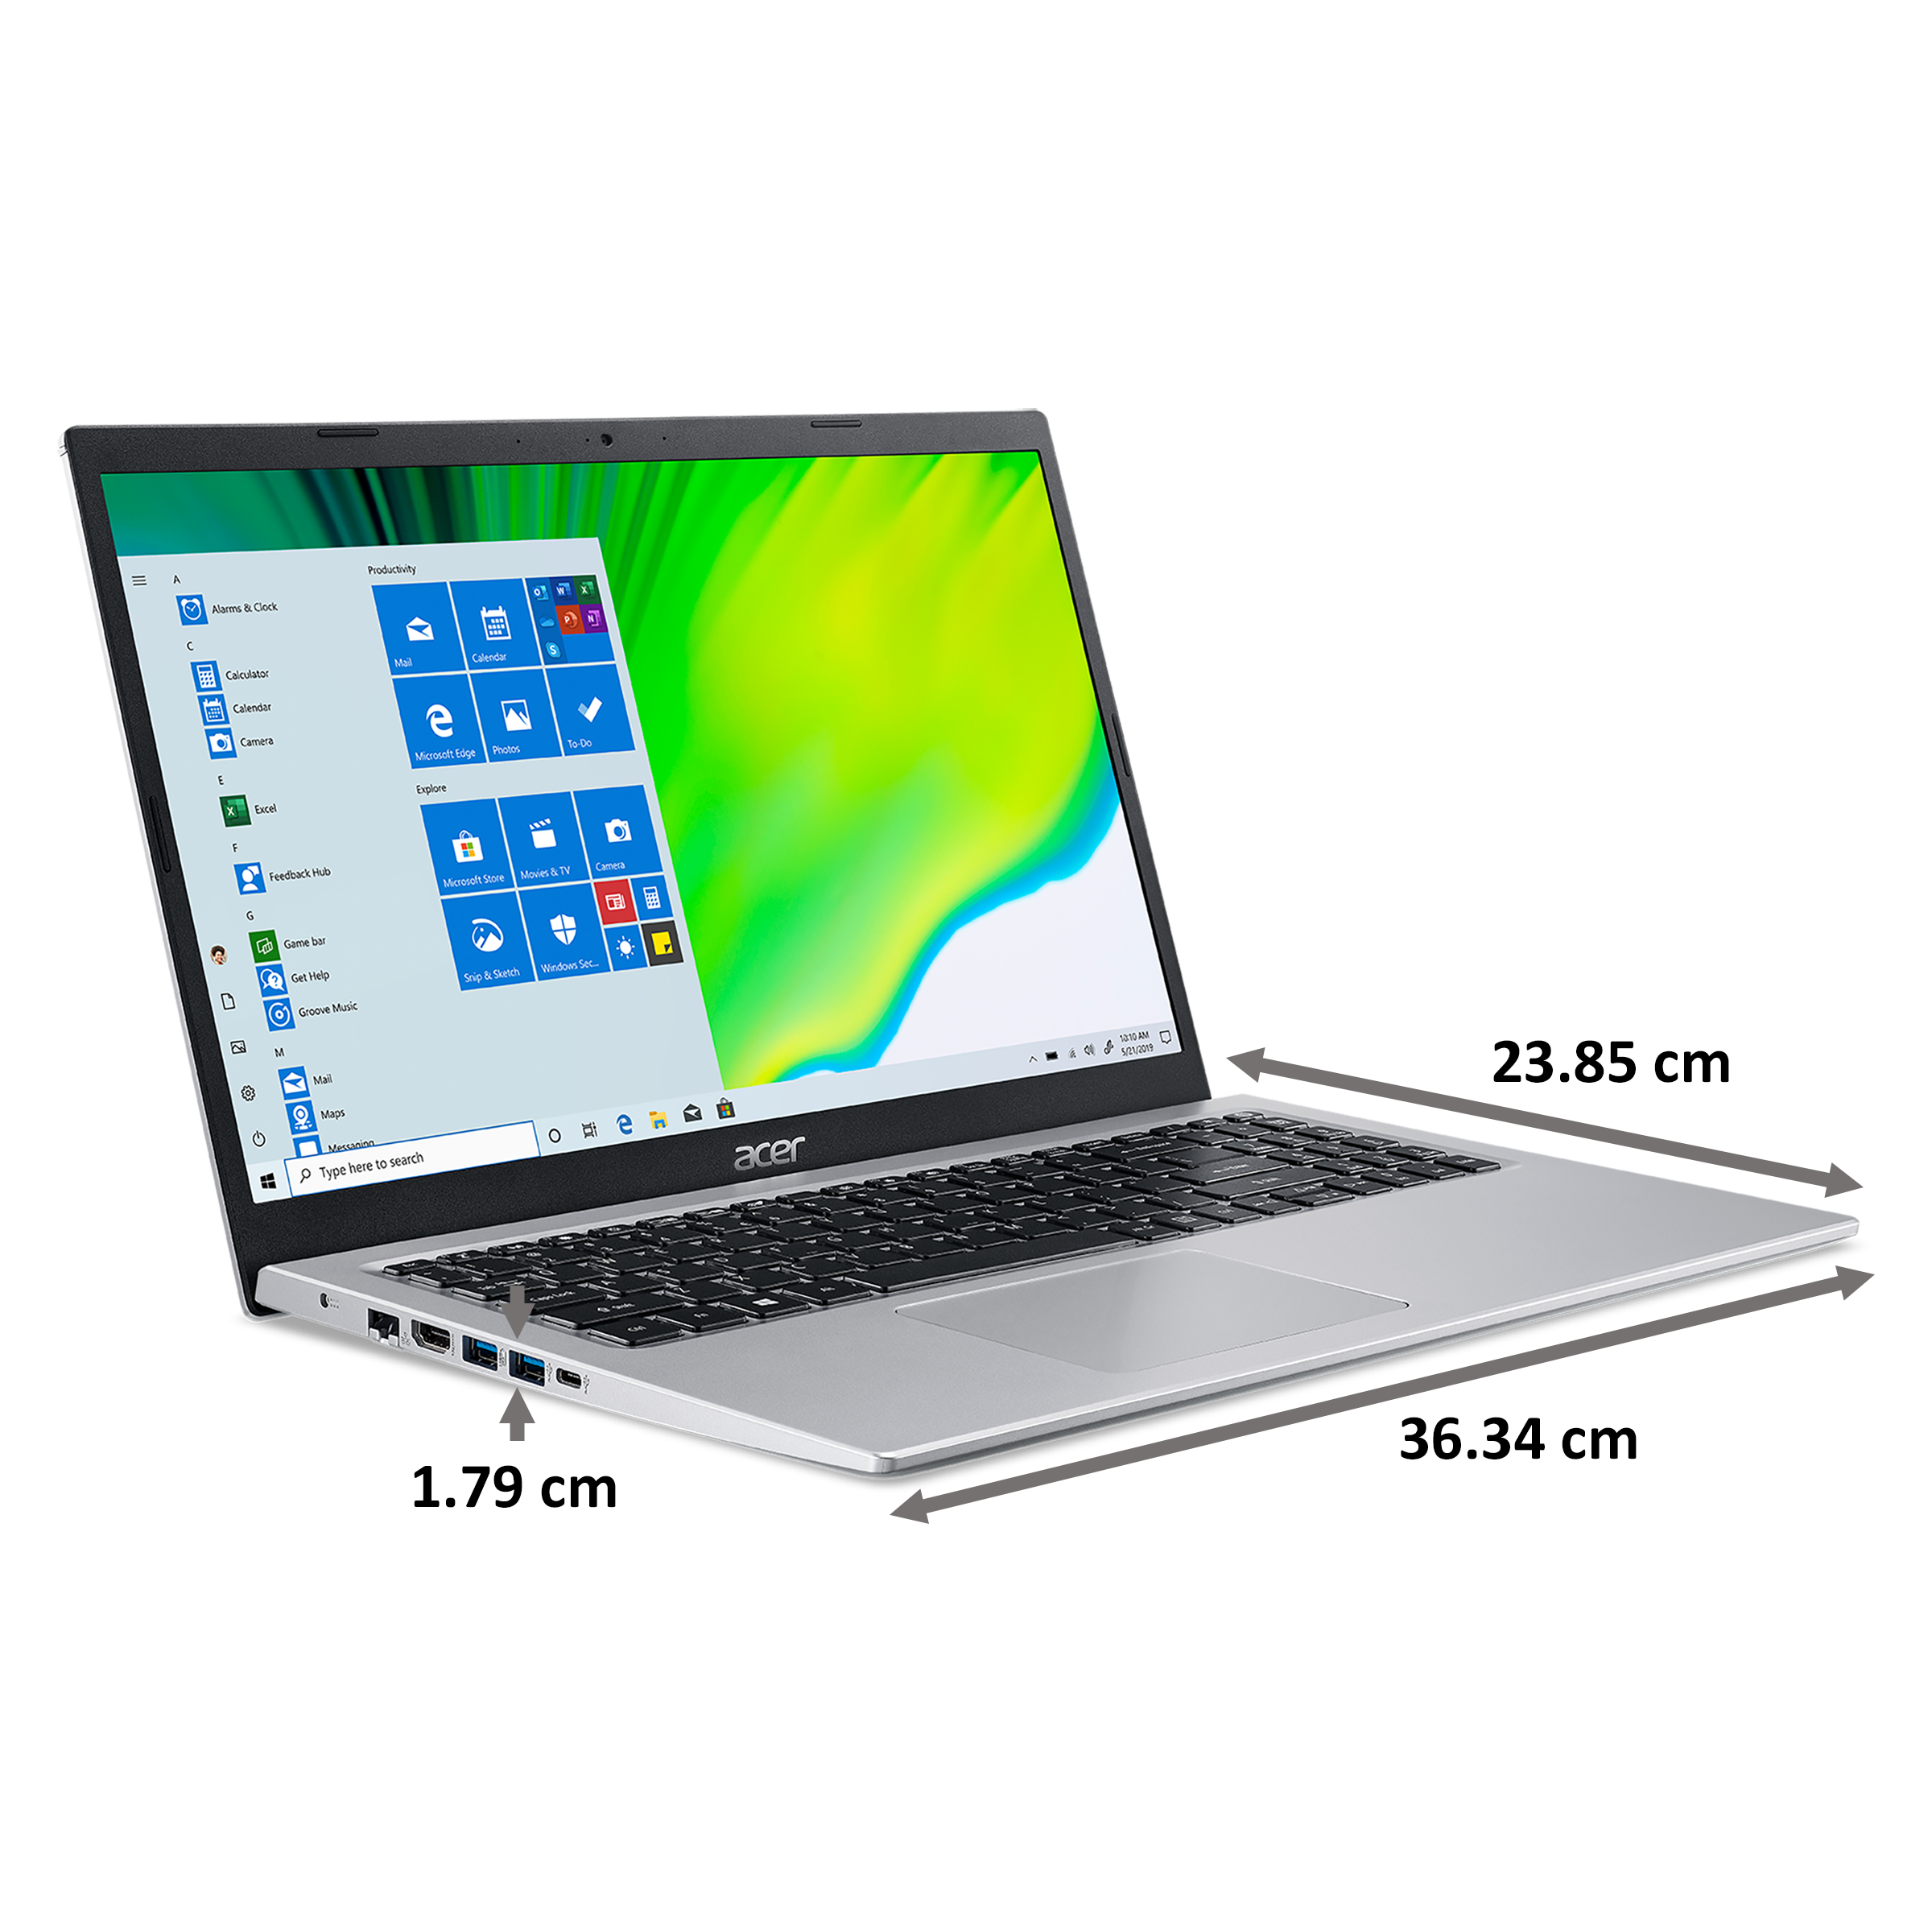 Acer Aspire 5 A515-56 (UN.A1GSI.008) Corei3 11th Gen Windows 10 Home Laptop (4GB RAM, 256GB SSD, Intel UHD Graphics, MS Office, 39.62cm, Silver)_2